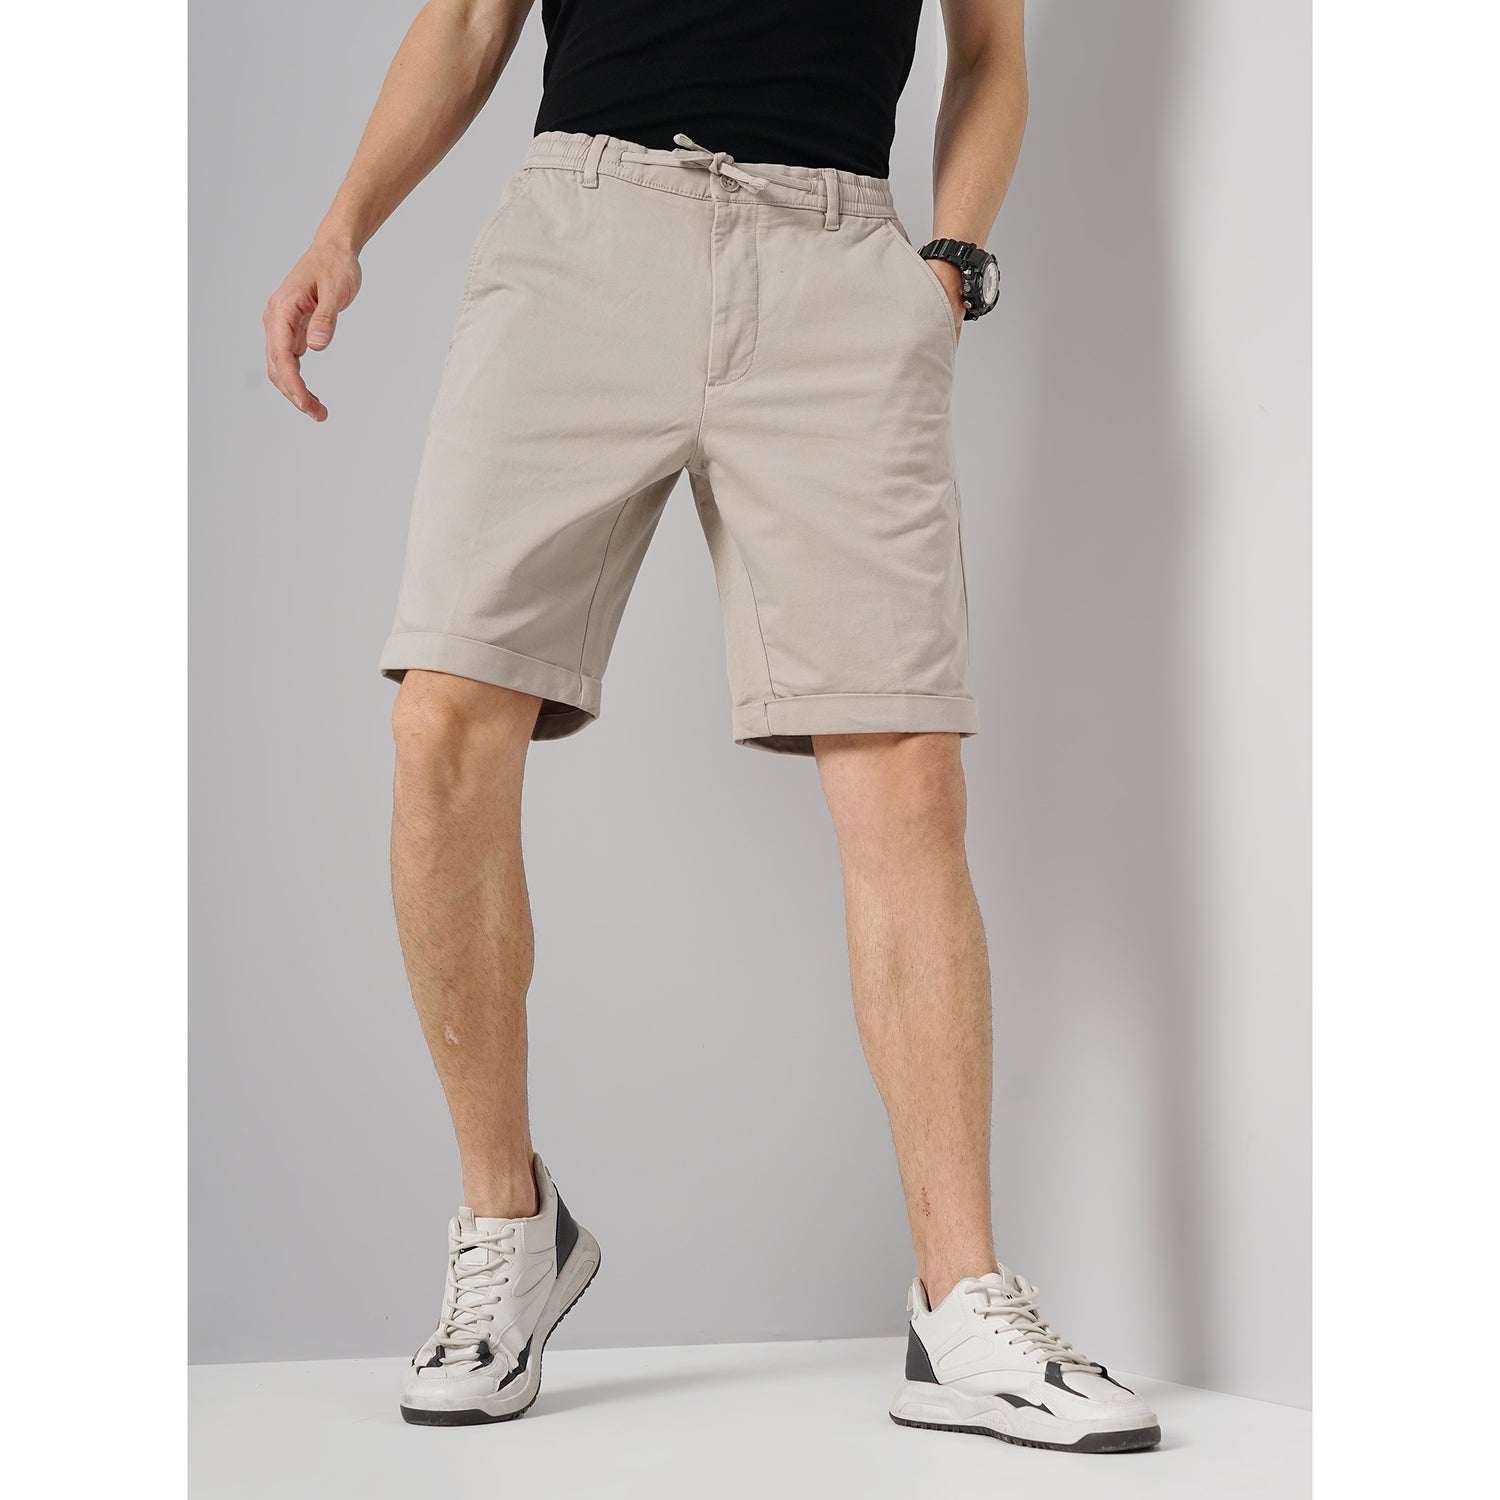 Men Beige Solid Loose Fit Cotton Cargo Casual Shorts (GOBELLOBM)